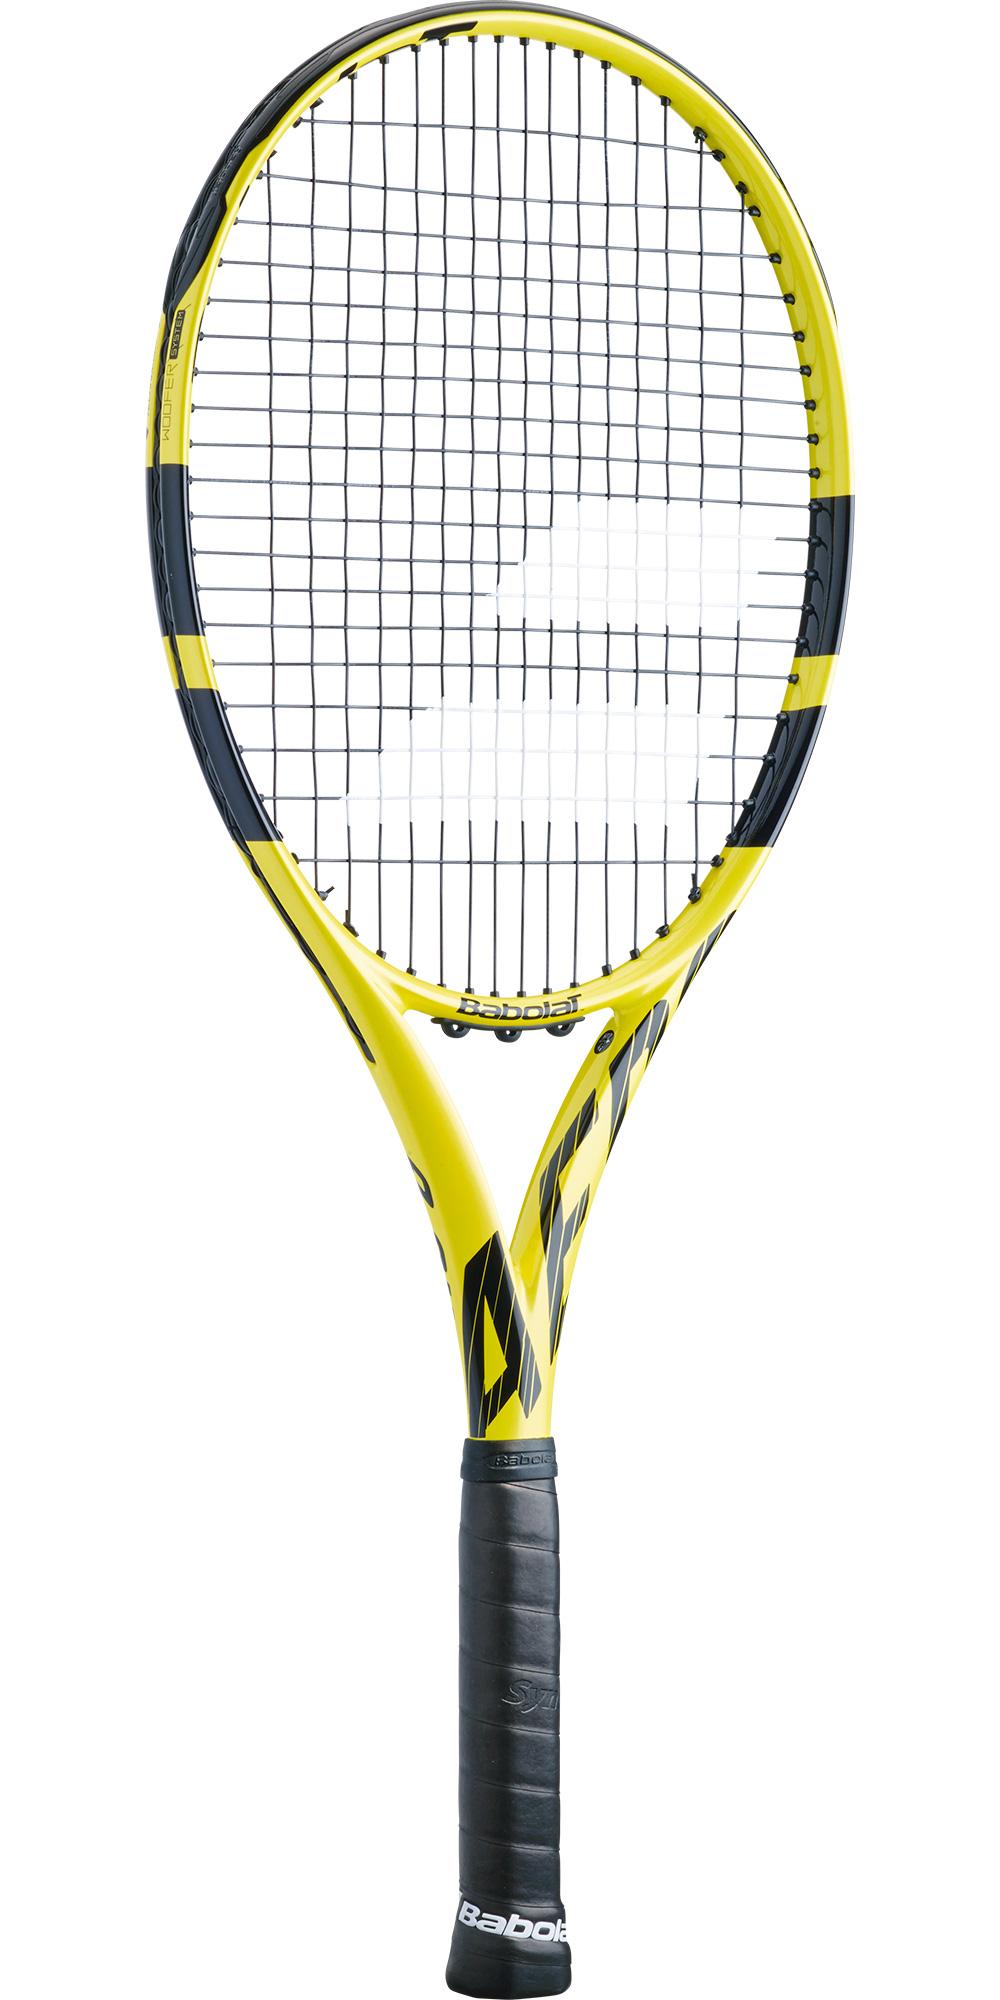 Aero G Tennis Racquet Kit Bundled with a Babolat Club Tennis Bag and 1 Can of 3 Tennis Balls Babolat Aero Game 